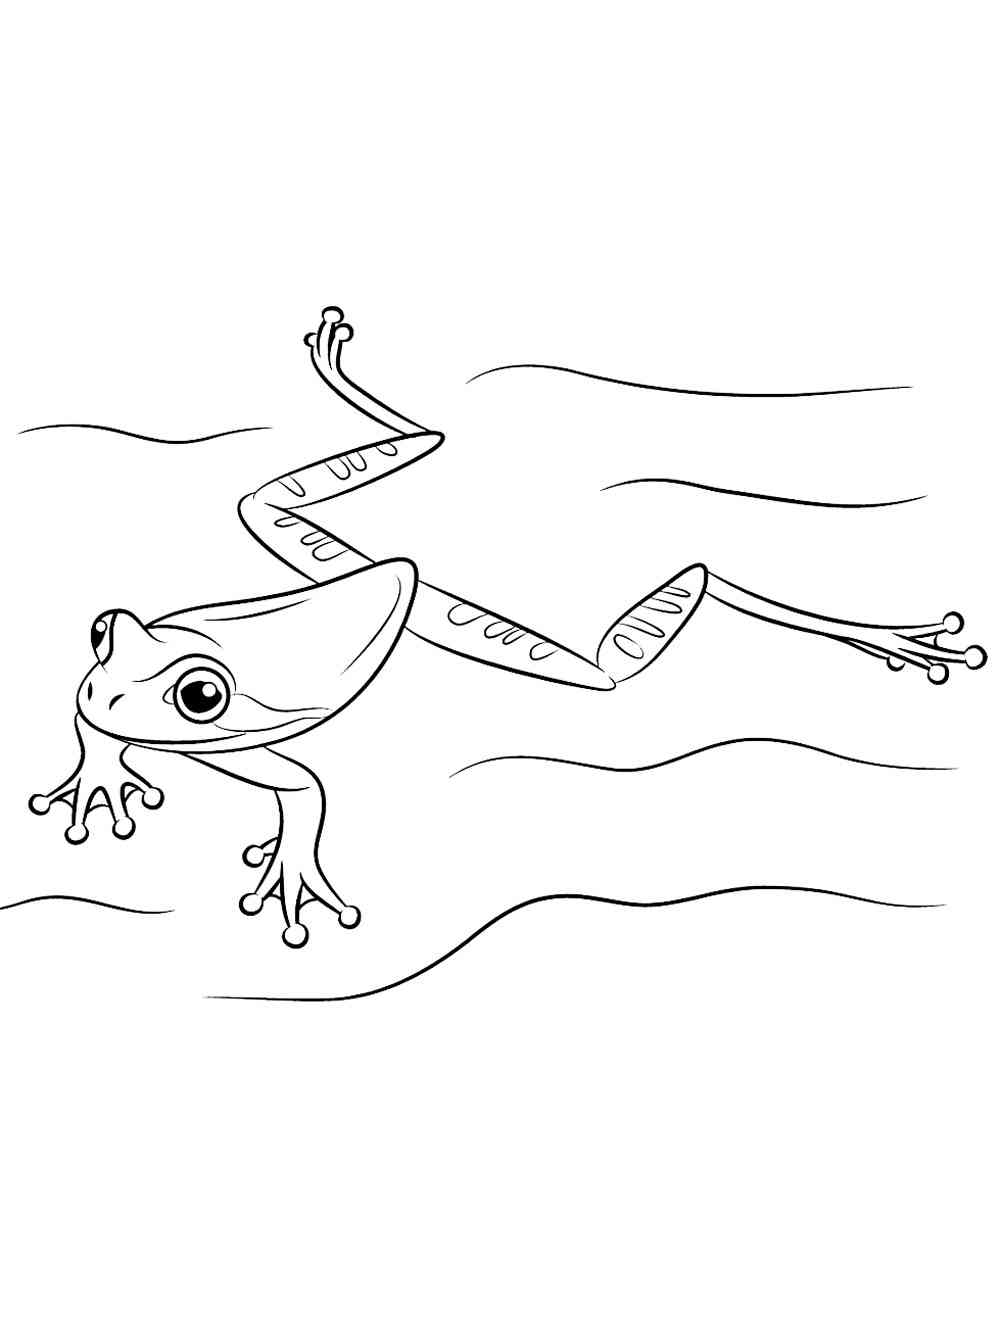 Amphibian 2 coloring page